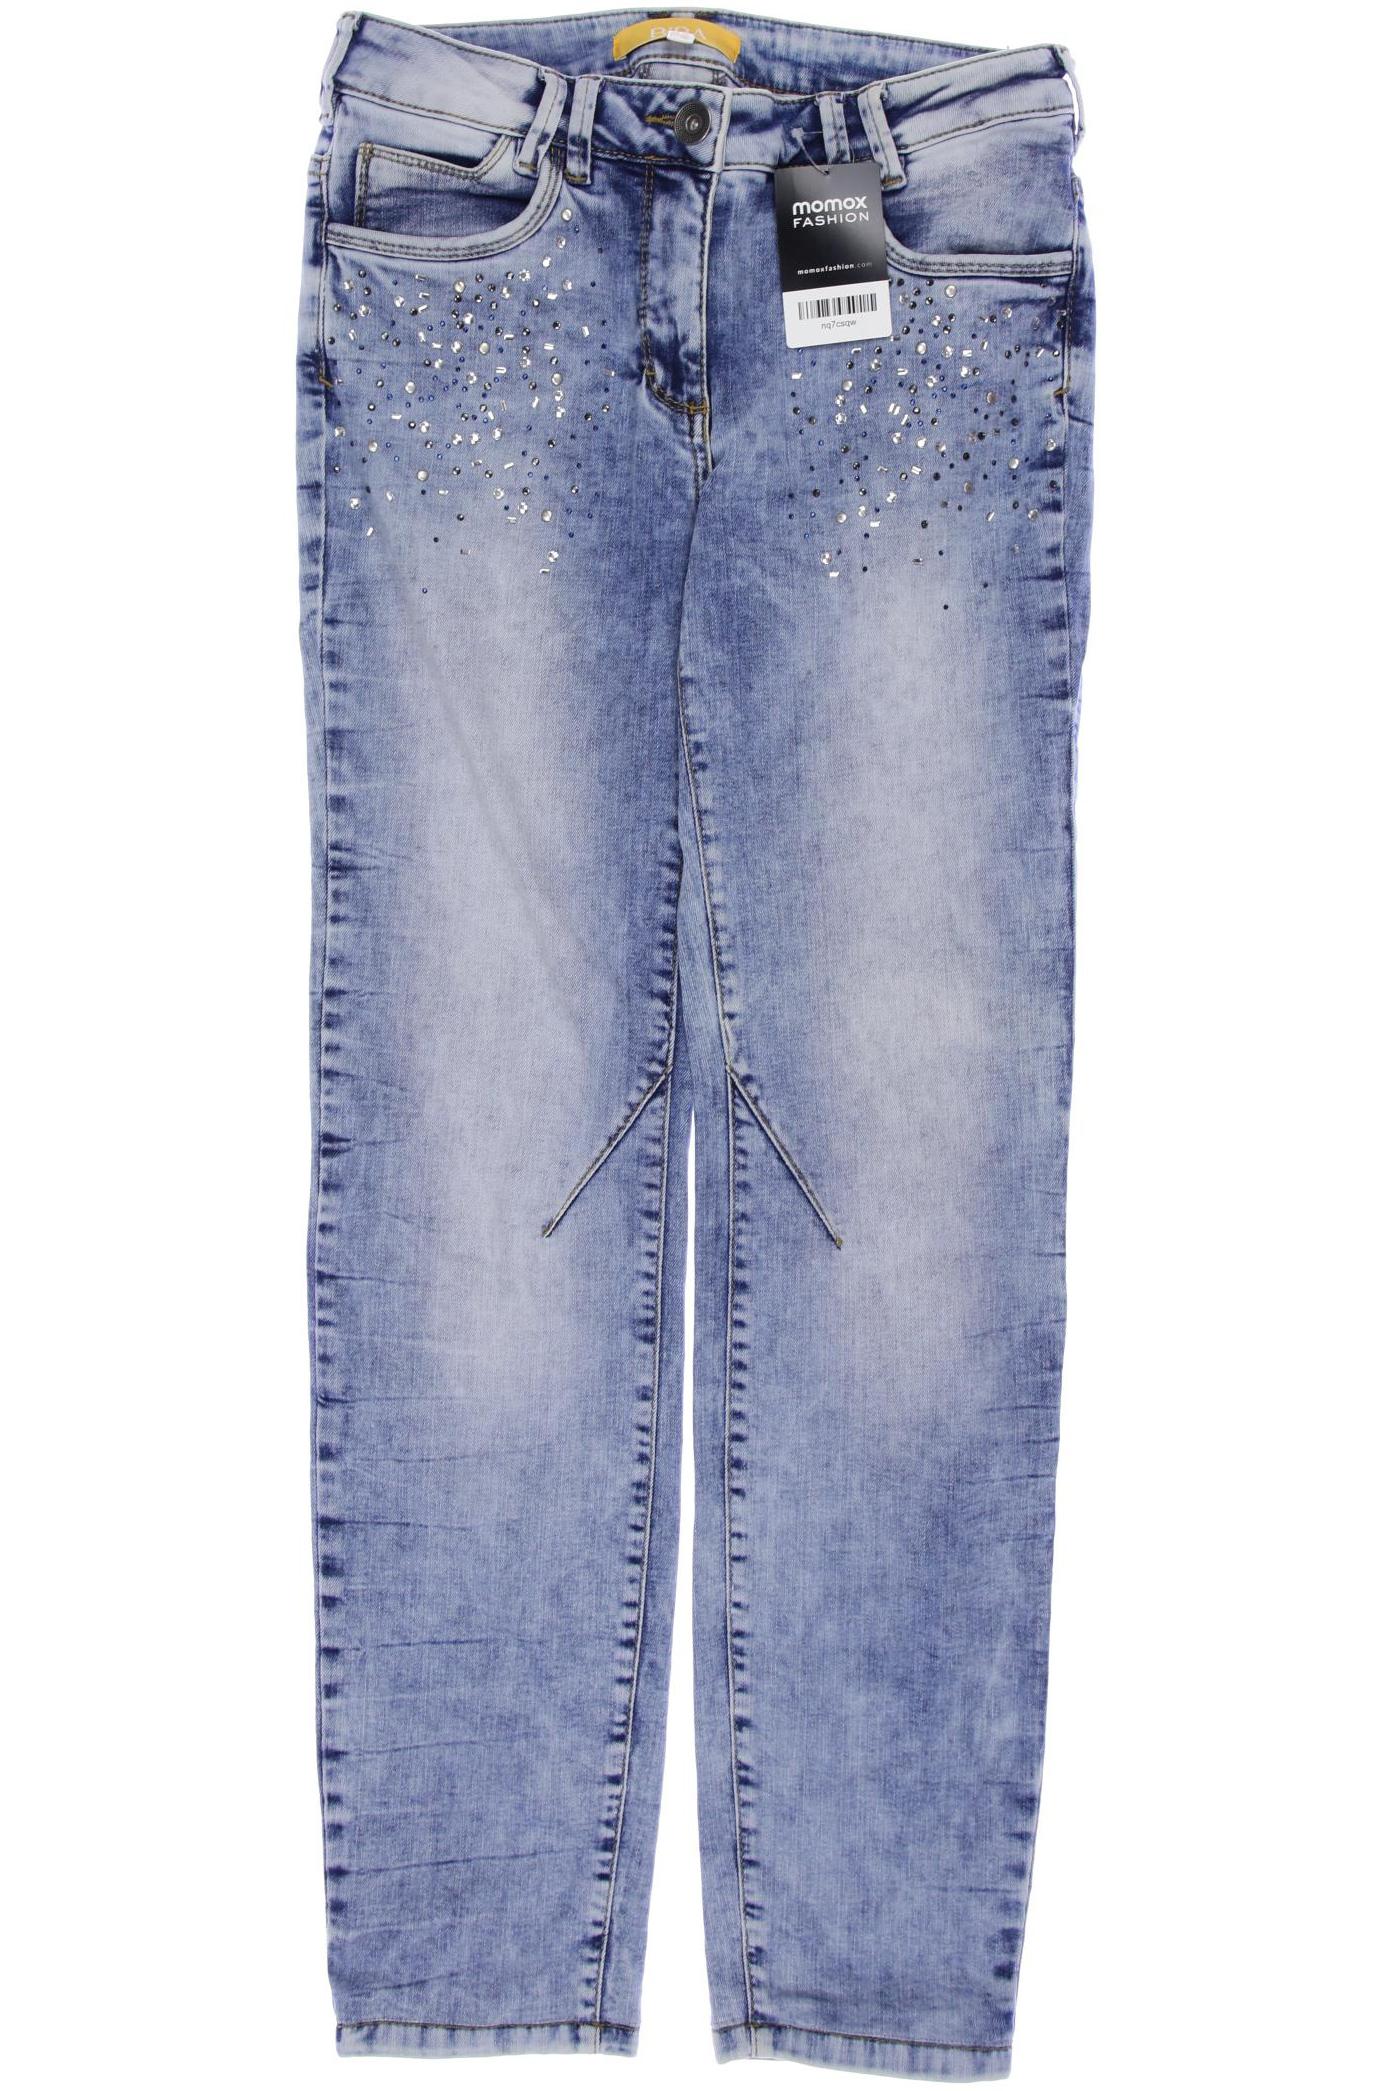 BiBA Damen Jeans, blau, Gr. 36 von BiBA